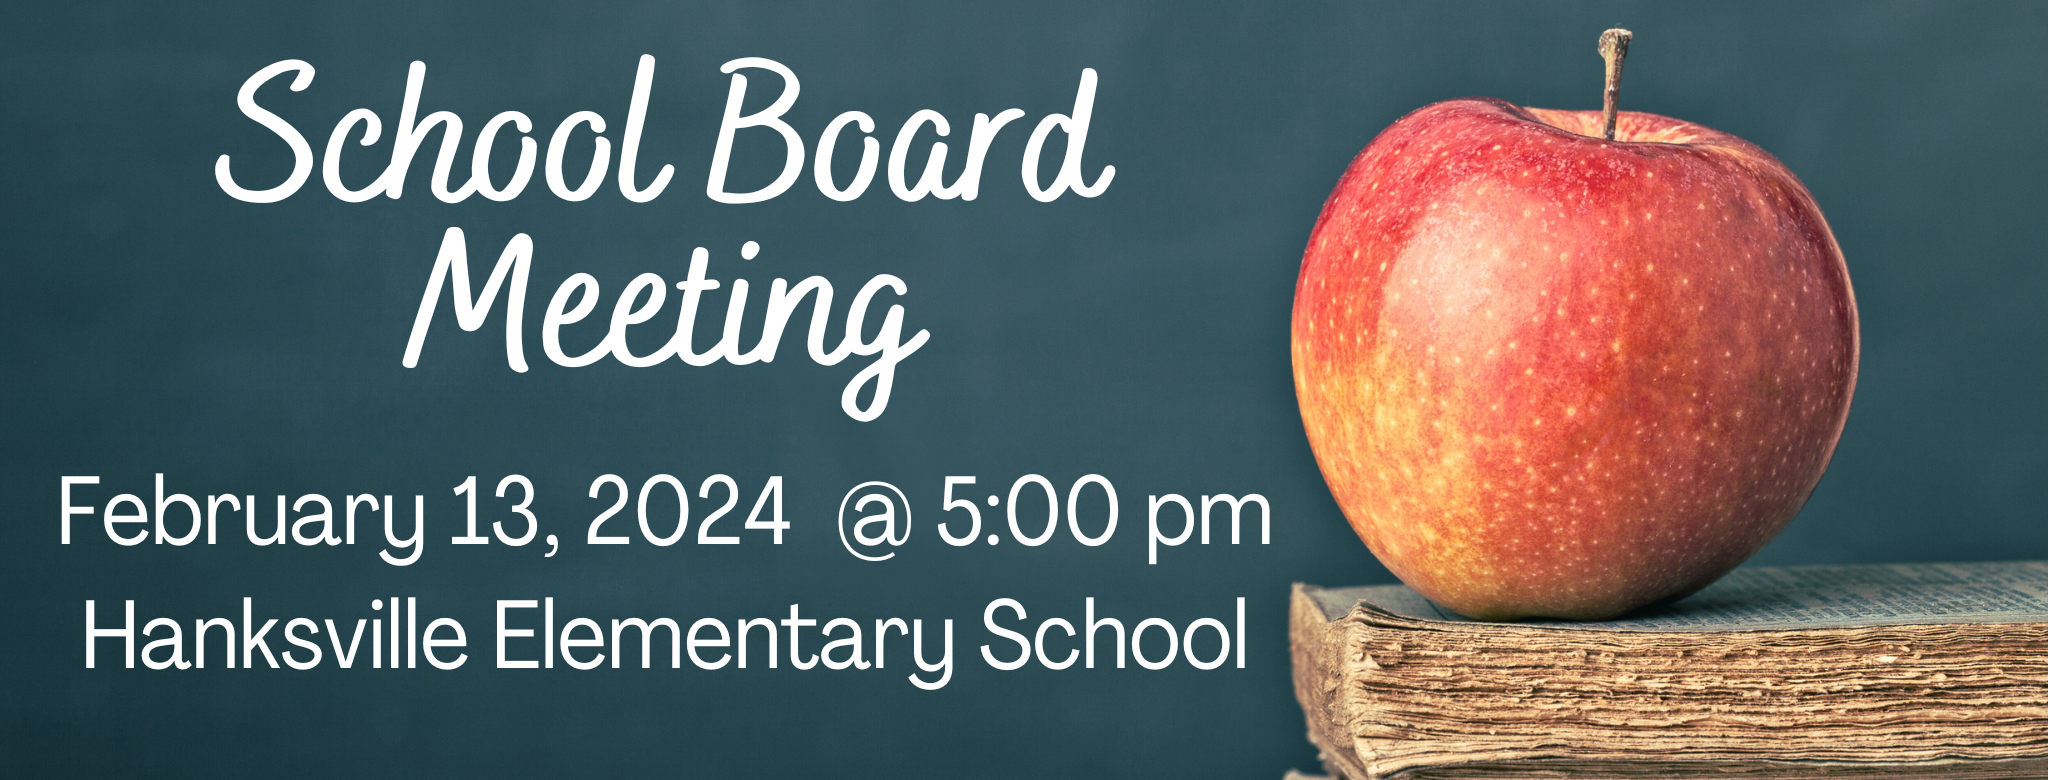 School Board Meeting Feb24